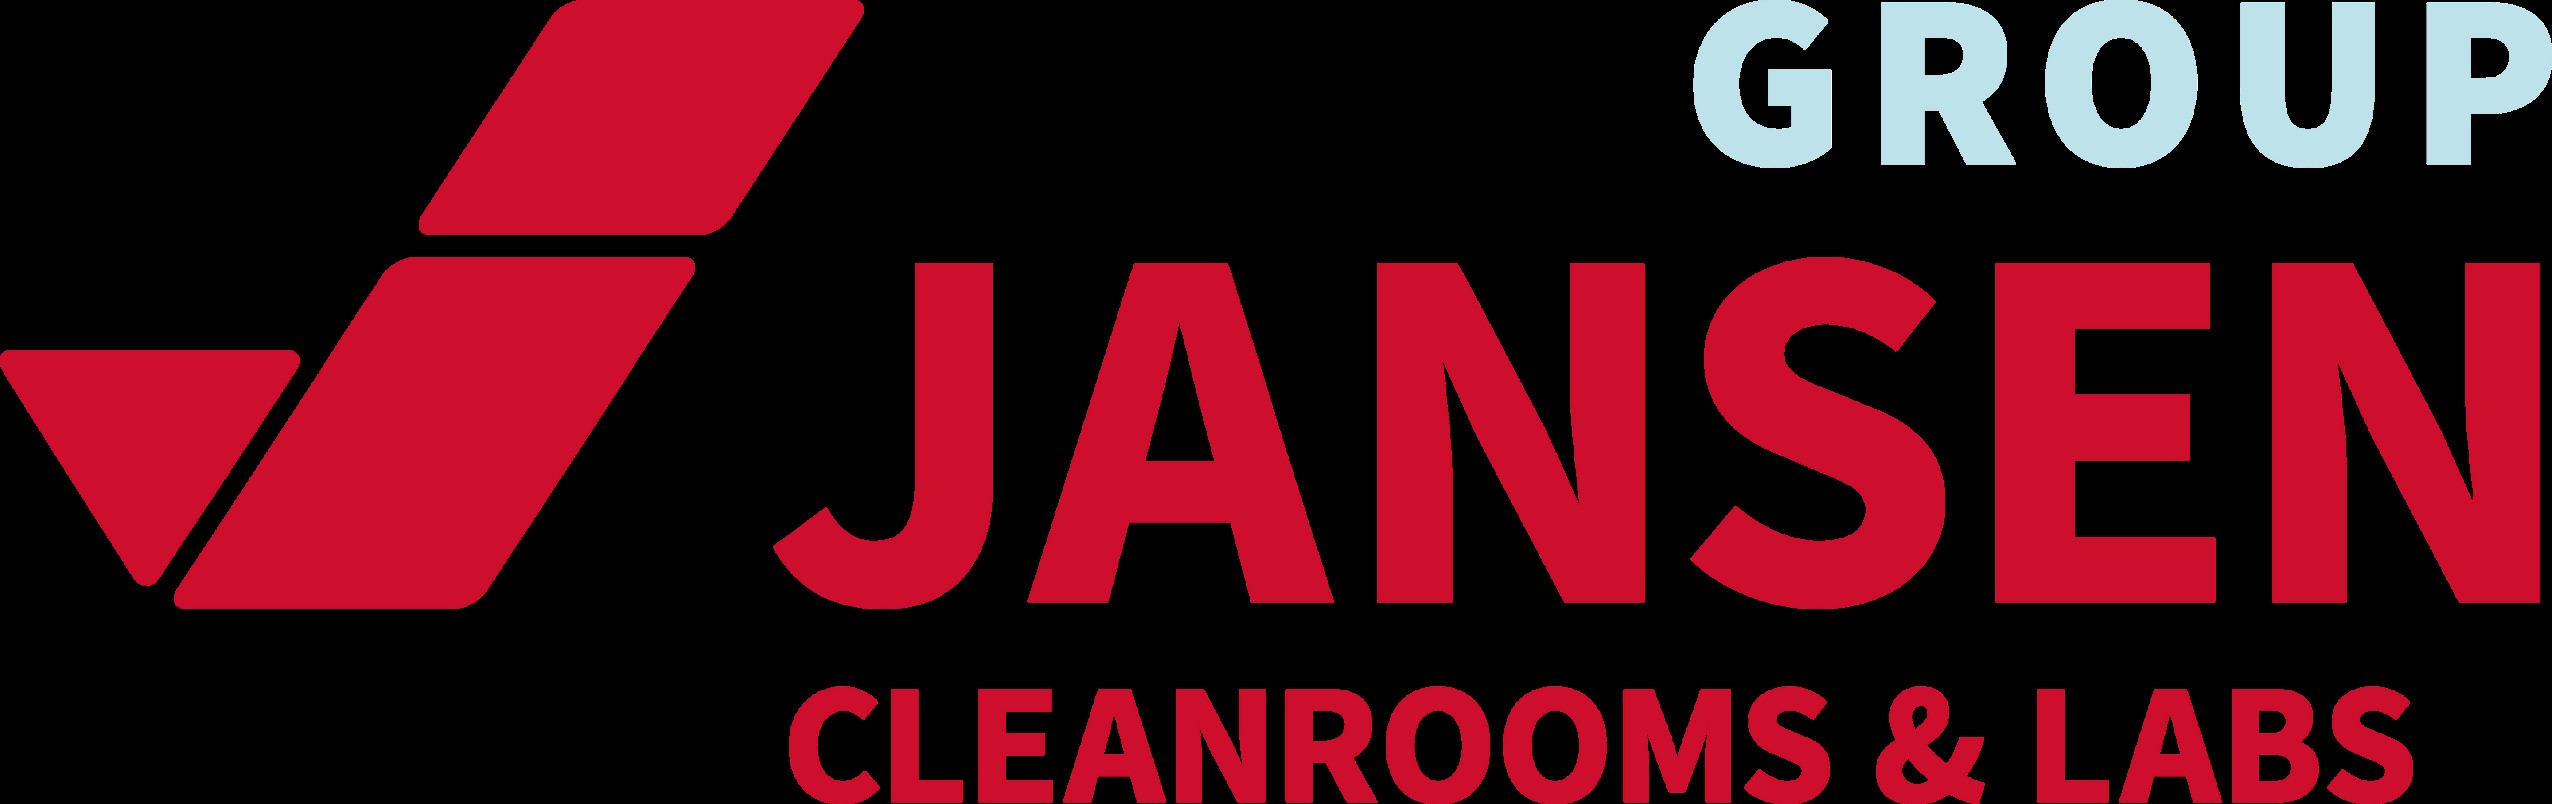 Jansen Cleanrooms & Labs